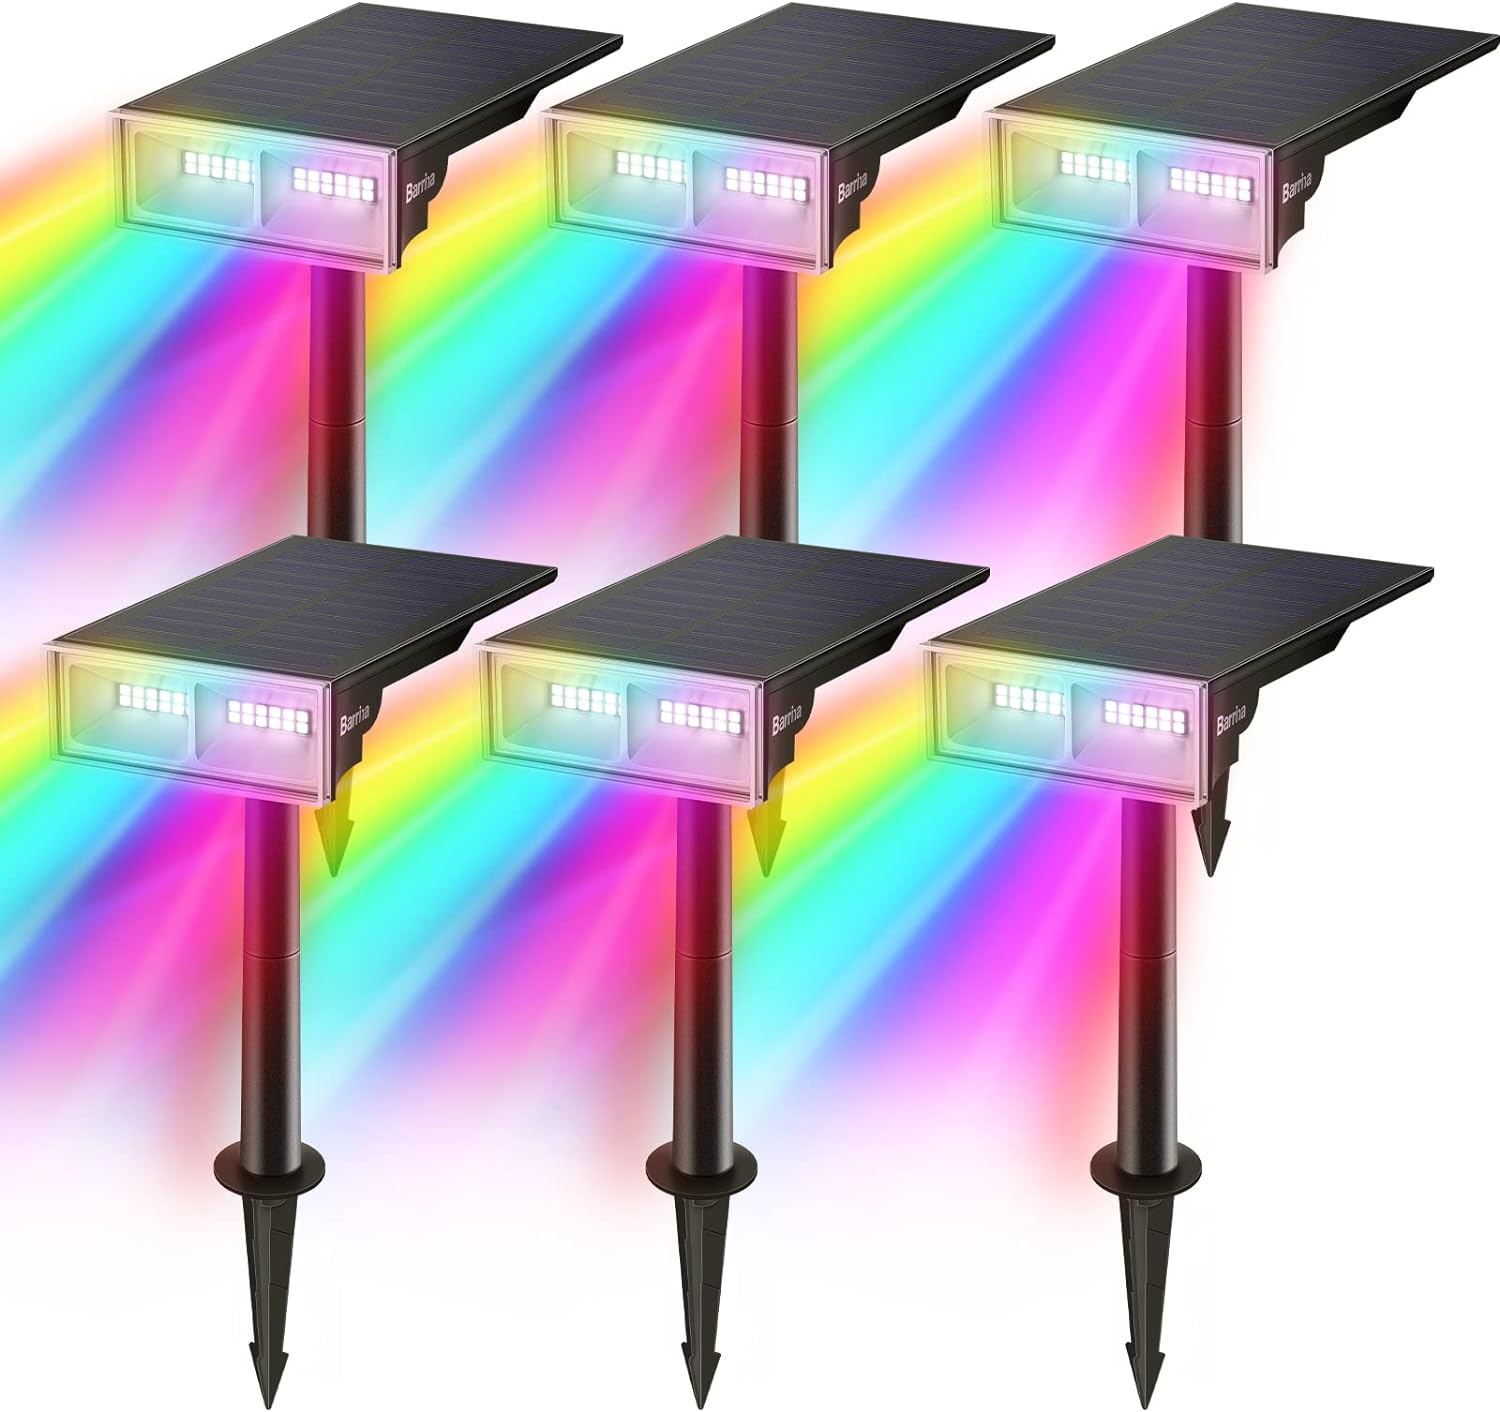 Solar Spot Lights,RGB 8 Colorful Modes,Auto ON/OFF,24 LEDs,2 Packs,TYN RGB 2